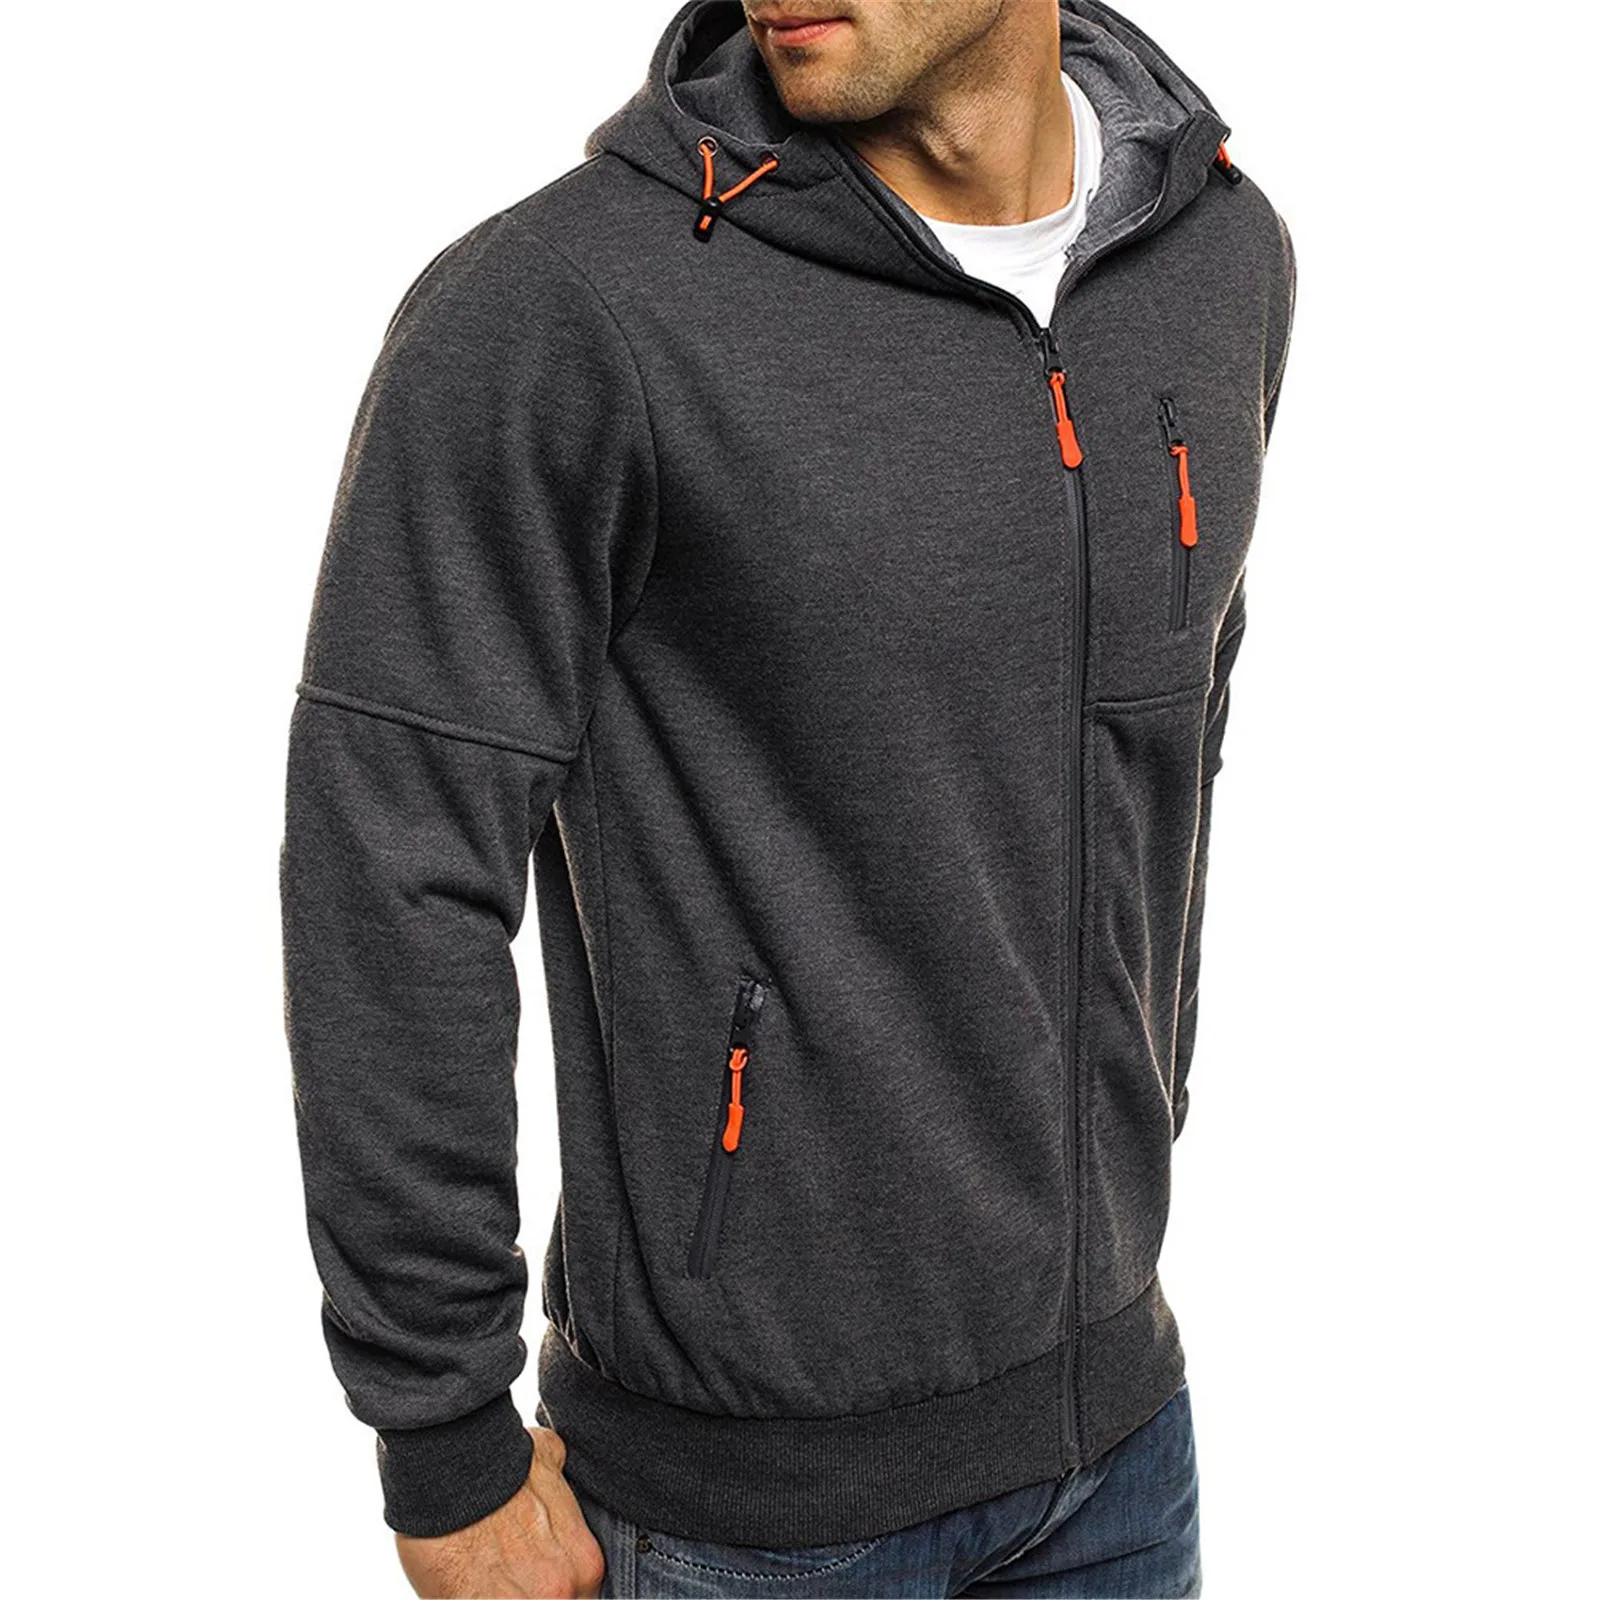 GRT Fitness H9d98f8d2f4e44f6bb650ee1be5c291a8U New 2021 Men's Splice Cap with Long Sleeve Zip Sweater Tops Sweatshirt Outwear Warm Hoodie  